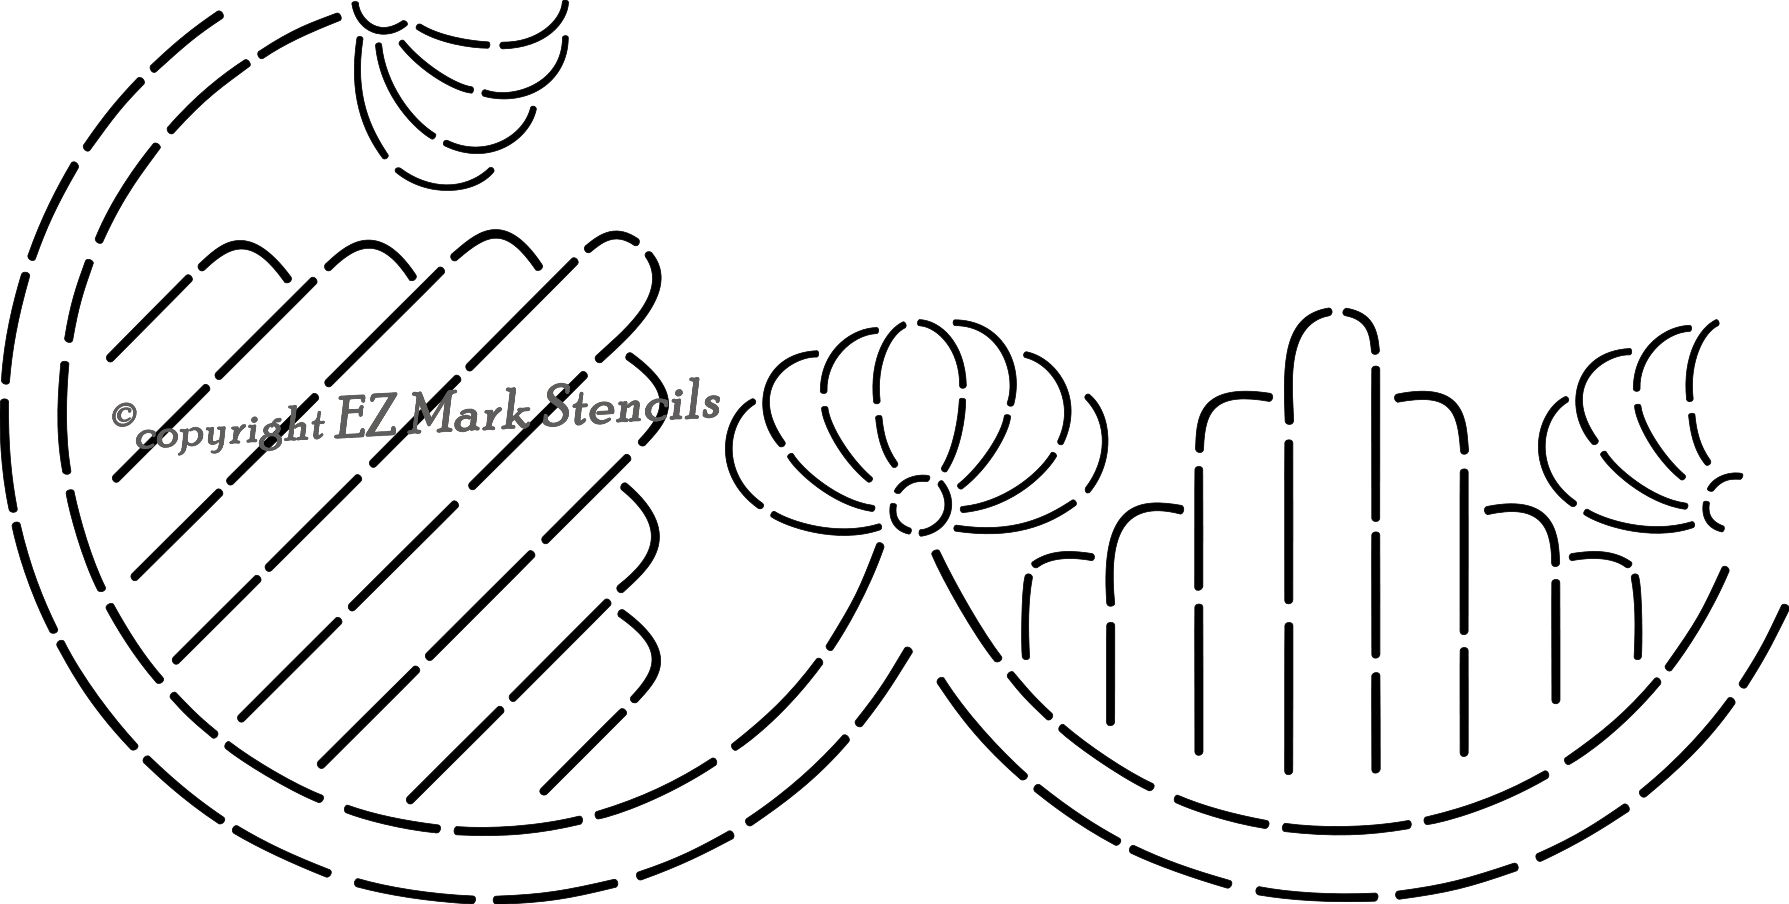 seashell border stencil